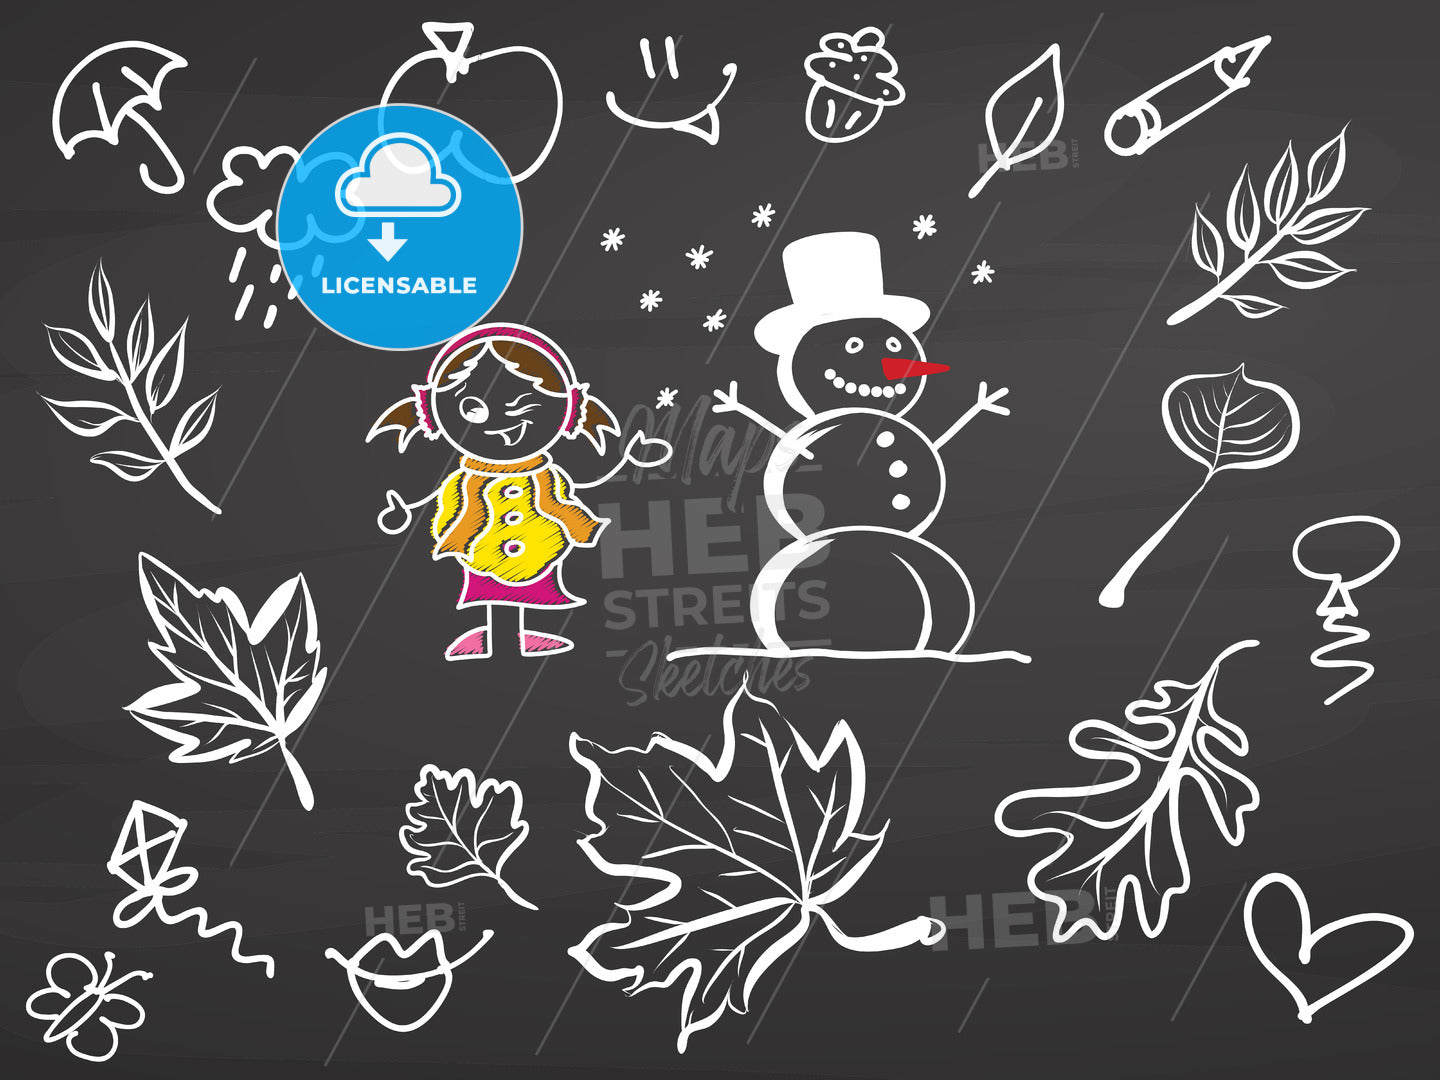 Autumn dreams. Doodles on Chalkboard. – instant download